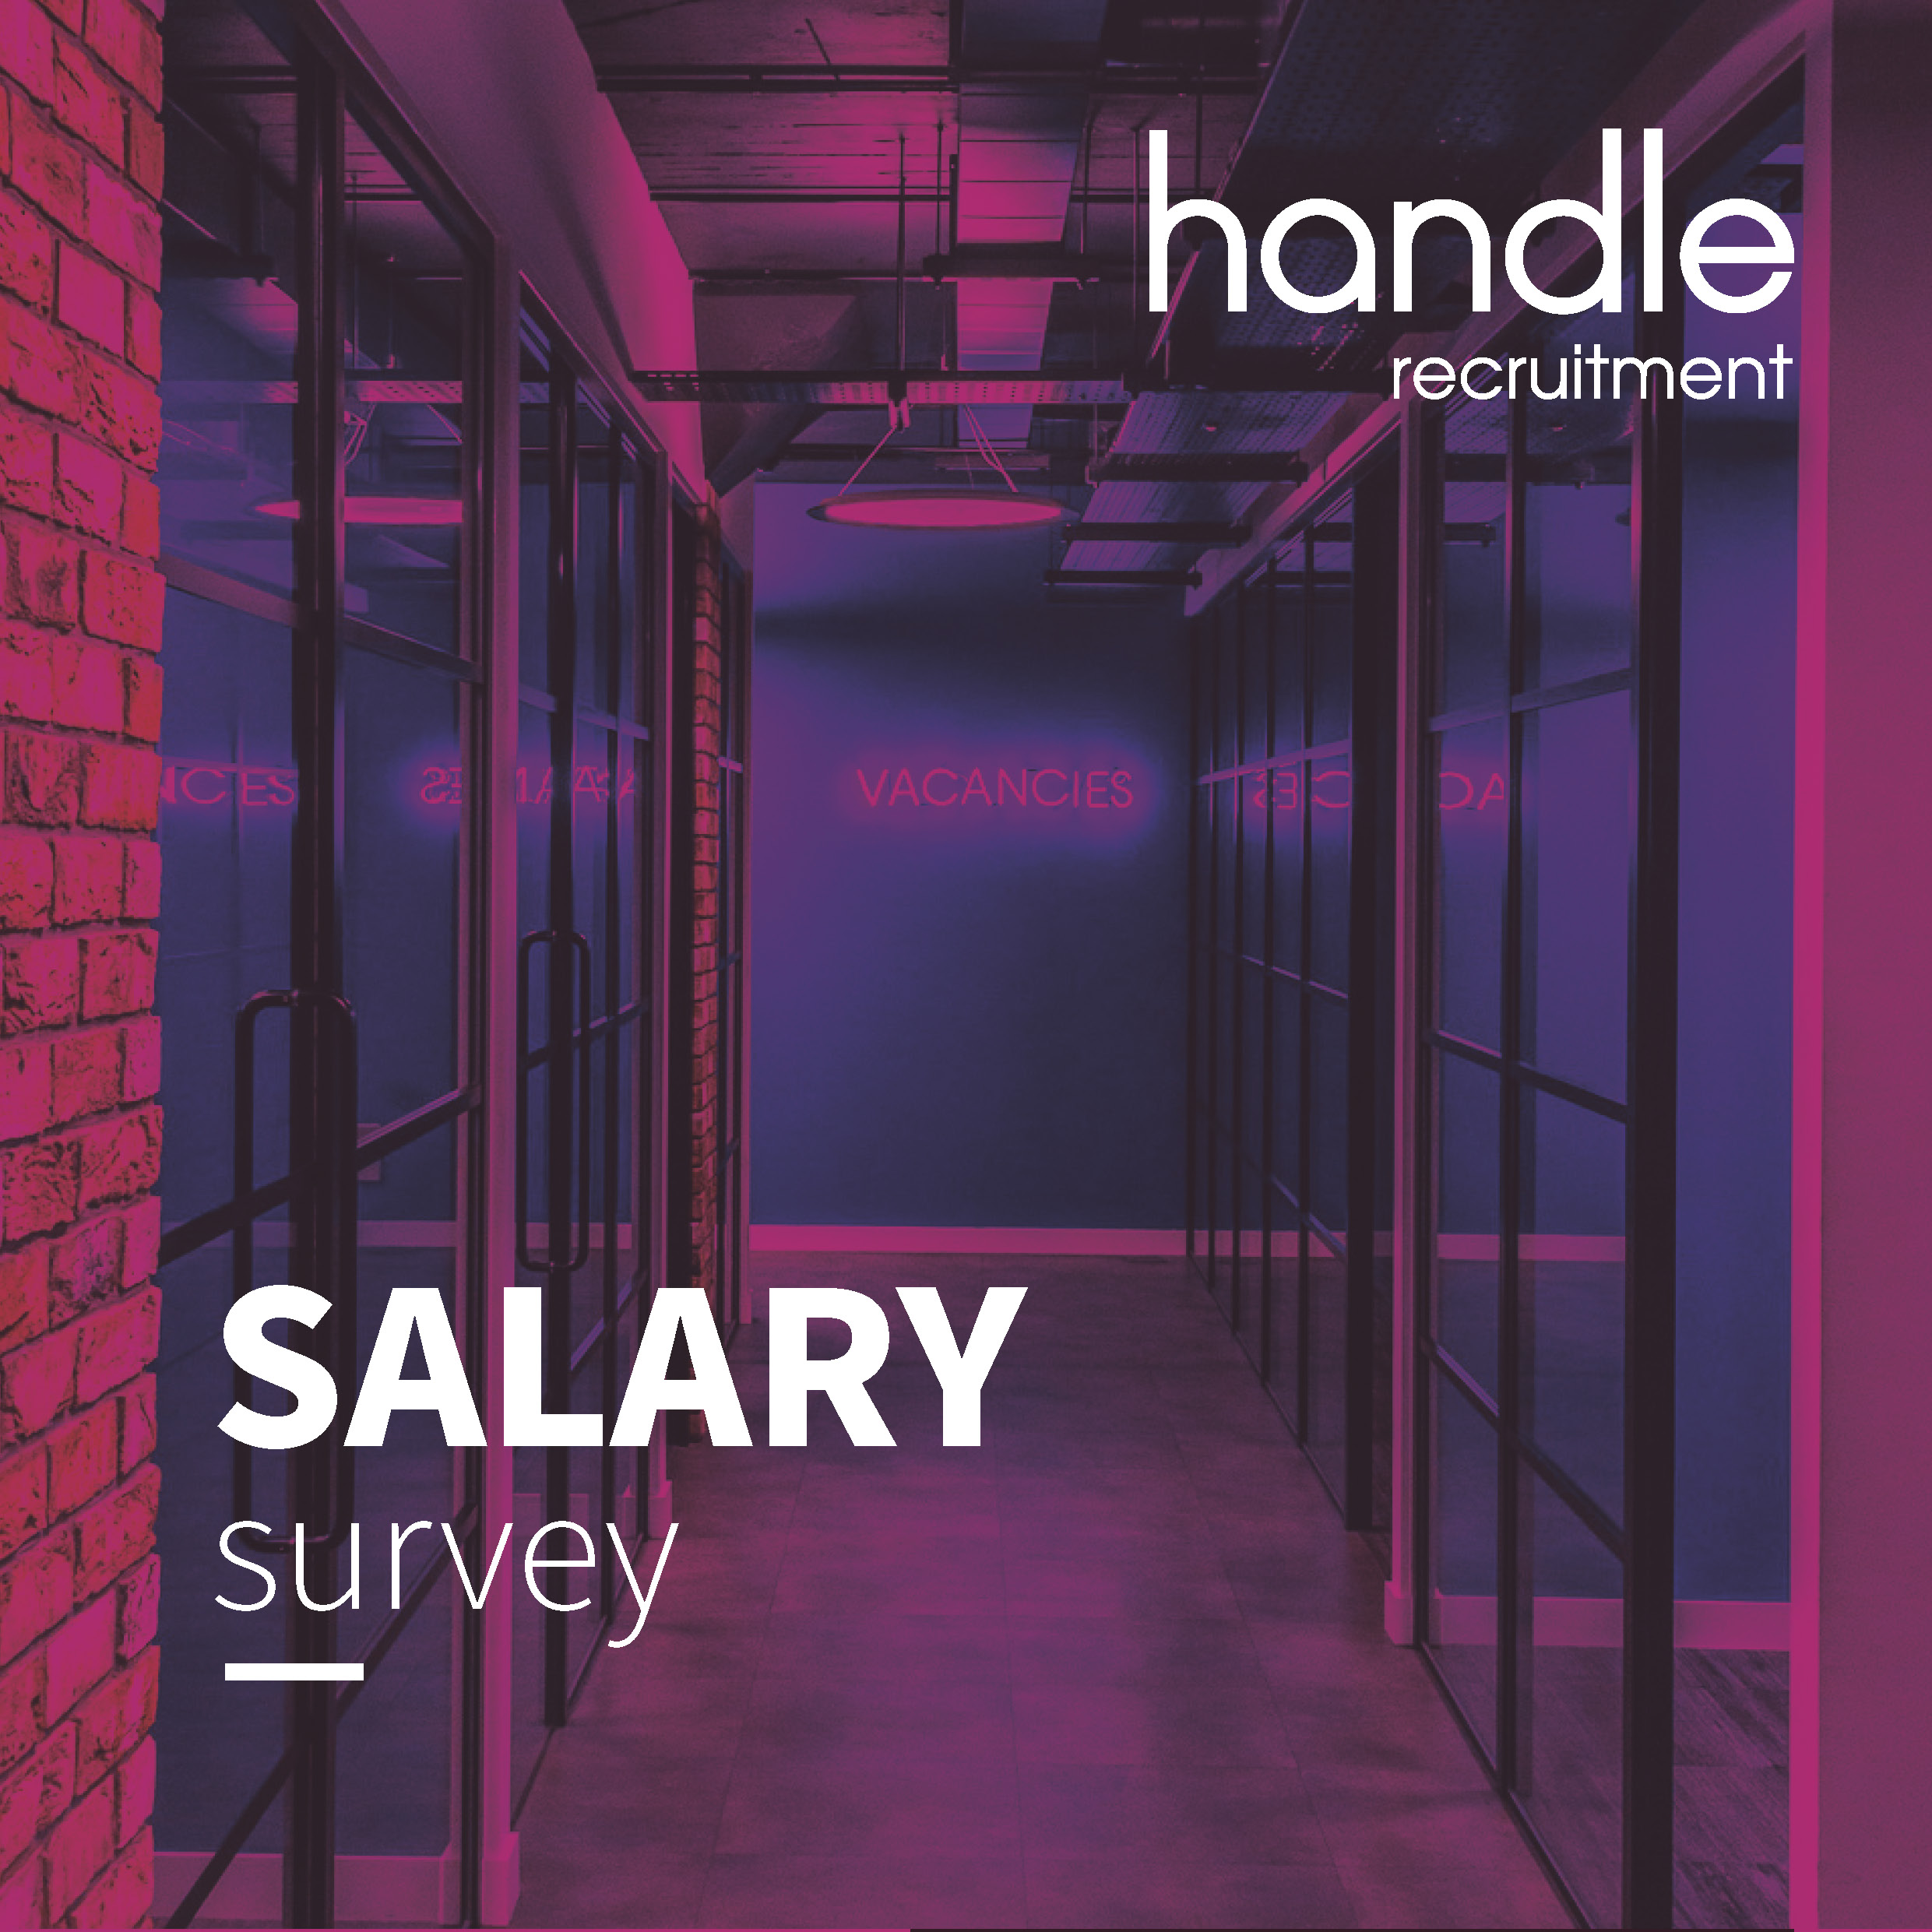 Request a bespoke salary survey